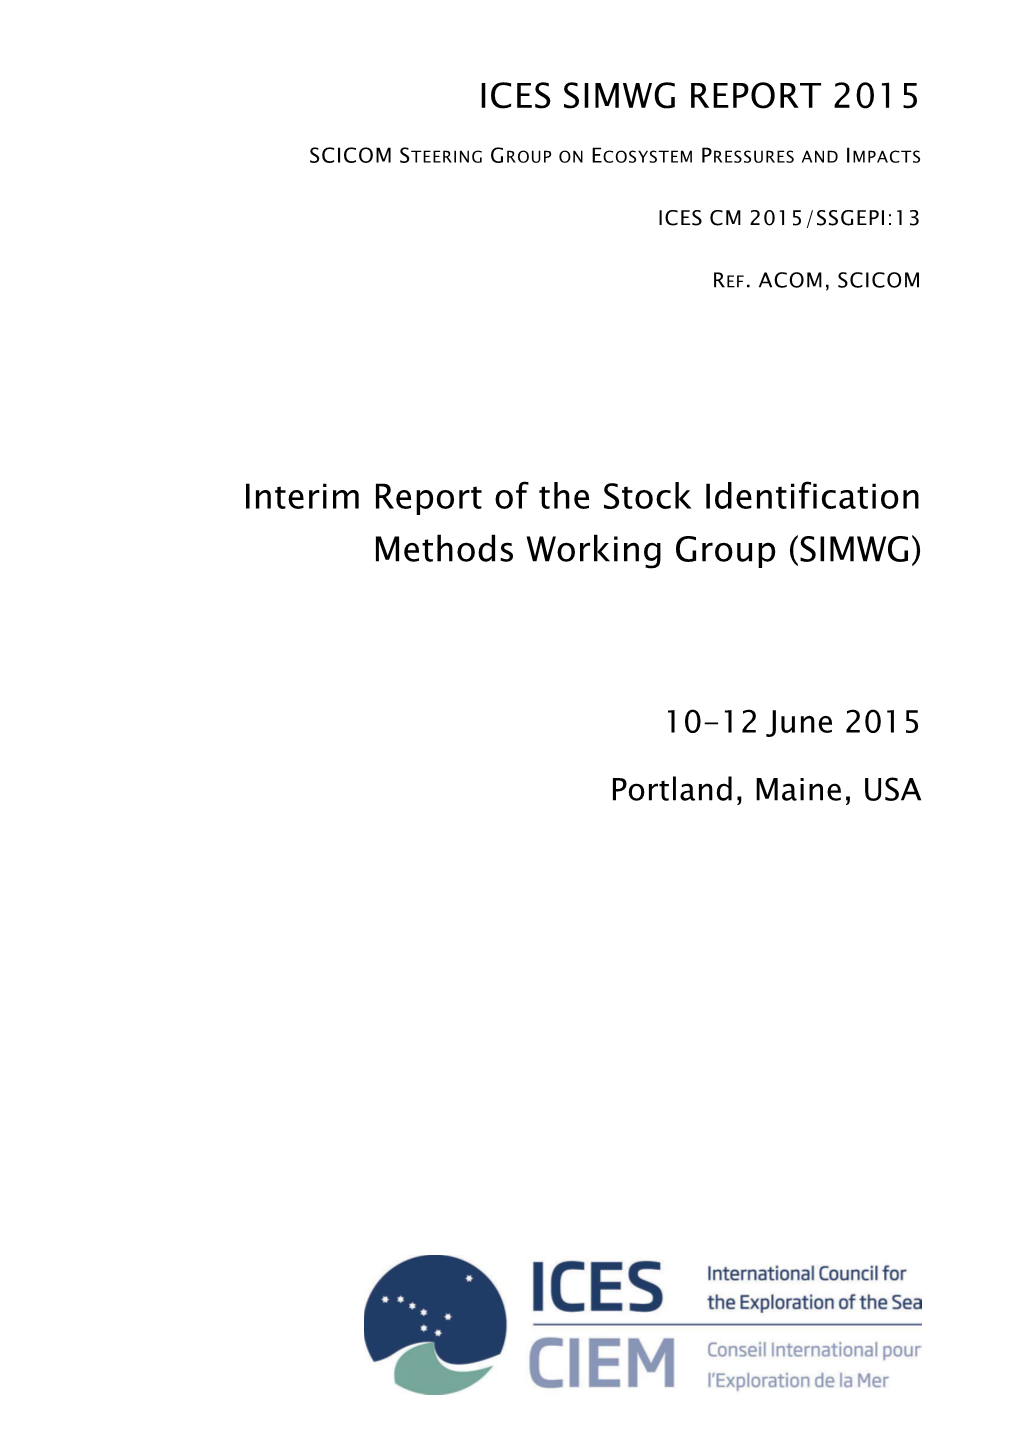 Interim Report of the Stock Identification Methods Working Group (SIMWG)